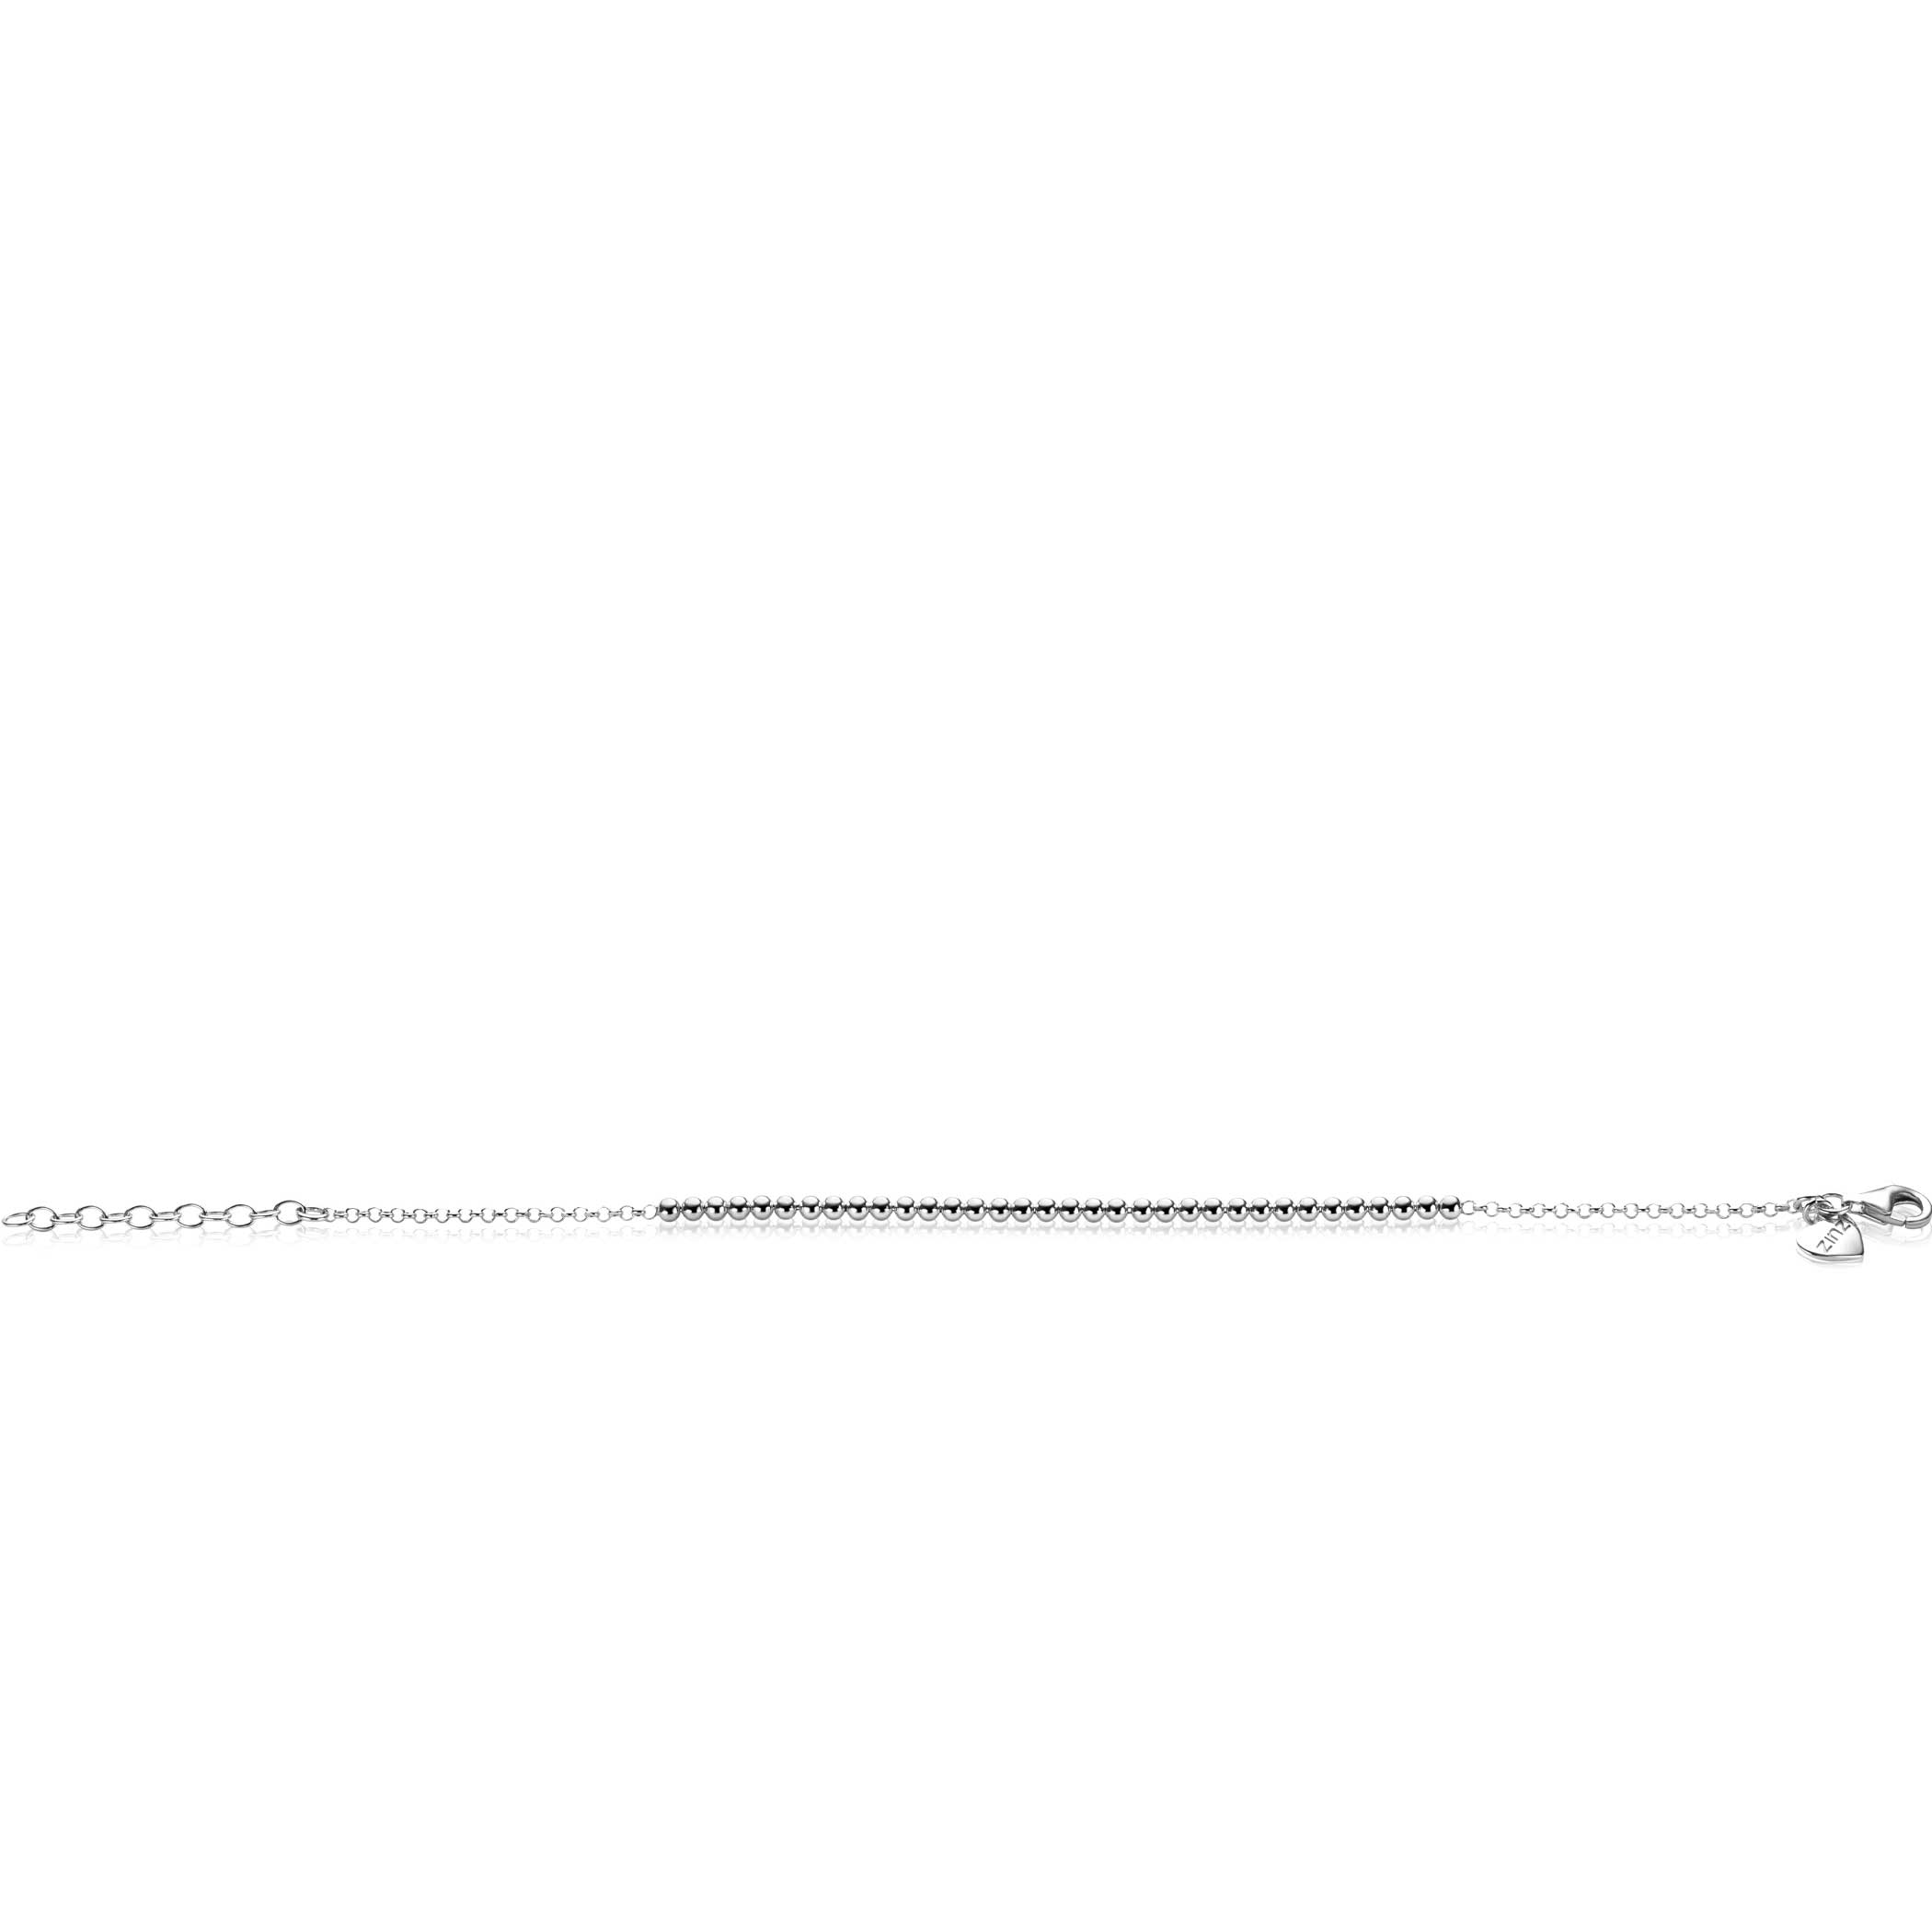 ZINZI silver jasseron bracelet with bead links (2.5mm wide) in the middle 16-19cm ZIA2640